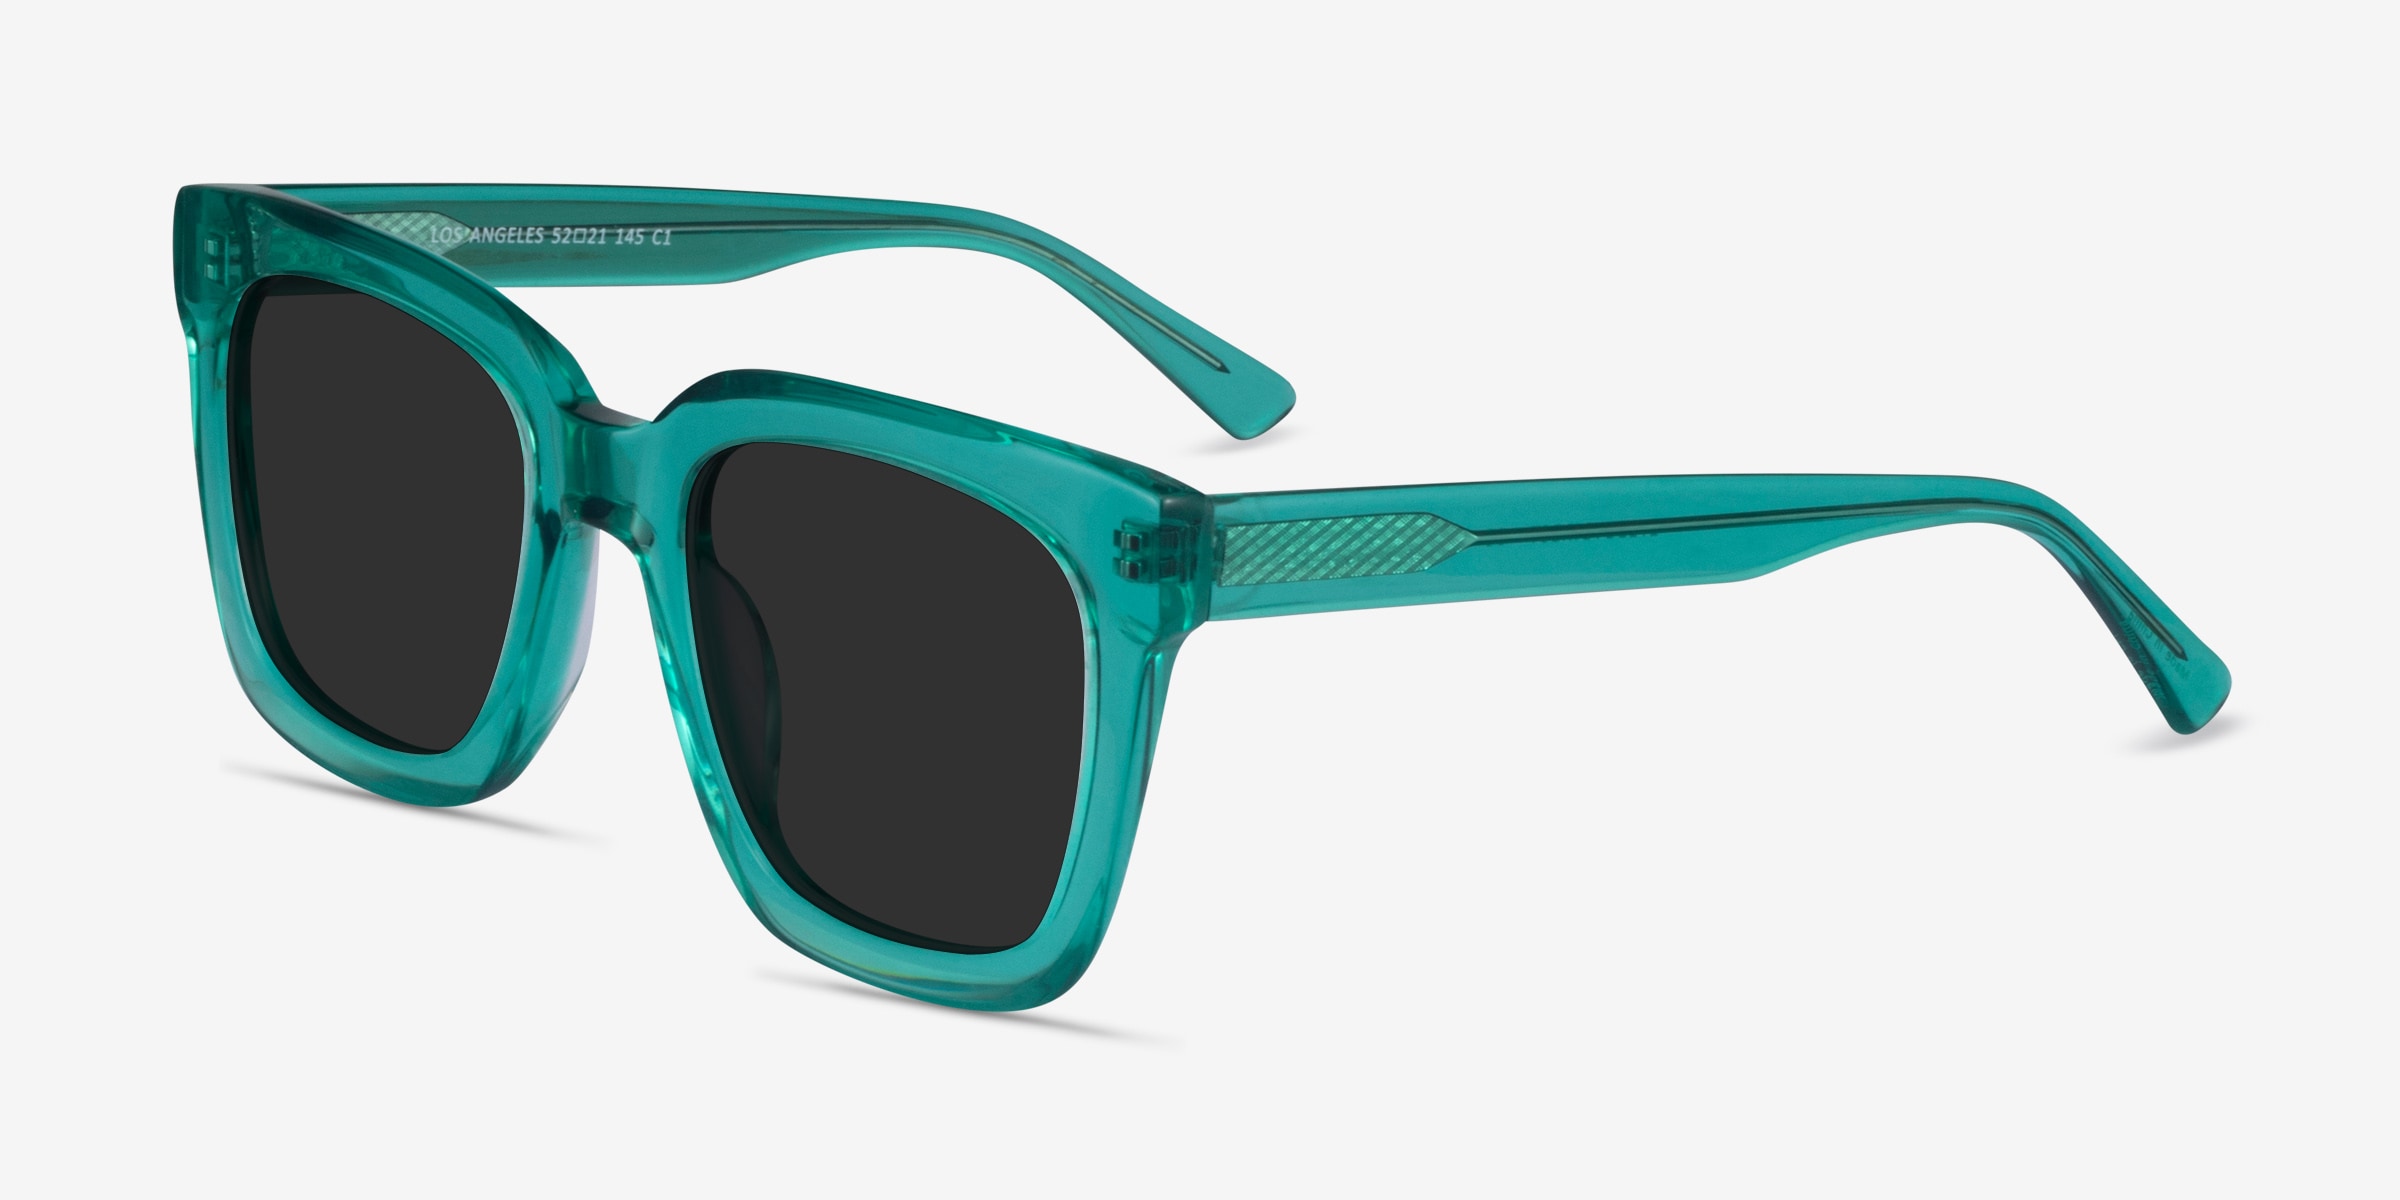 Los Angeles - Square Clear Green Frame Prescription Sunglasses 